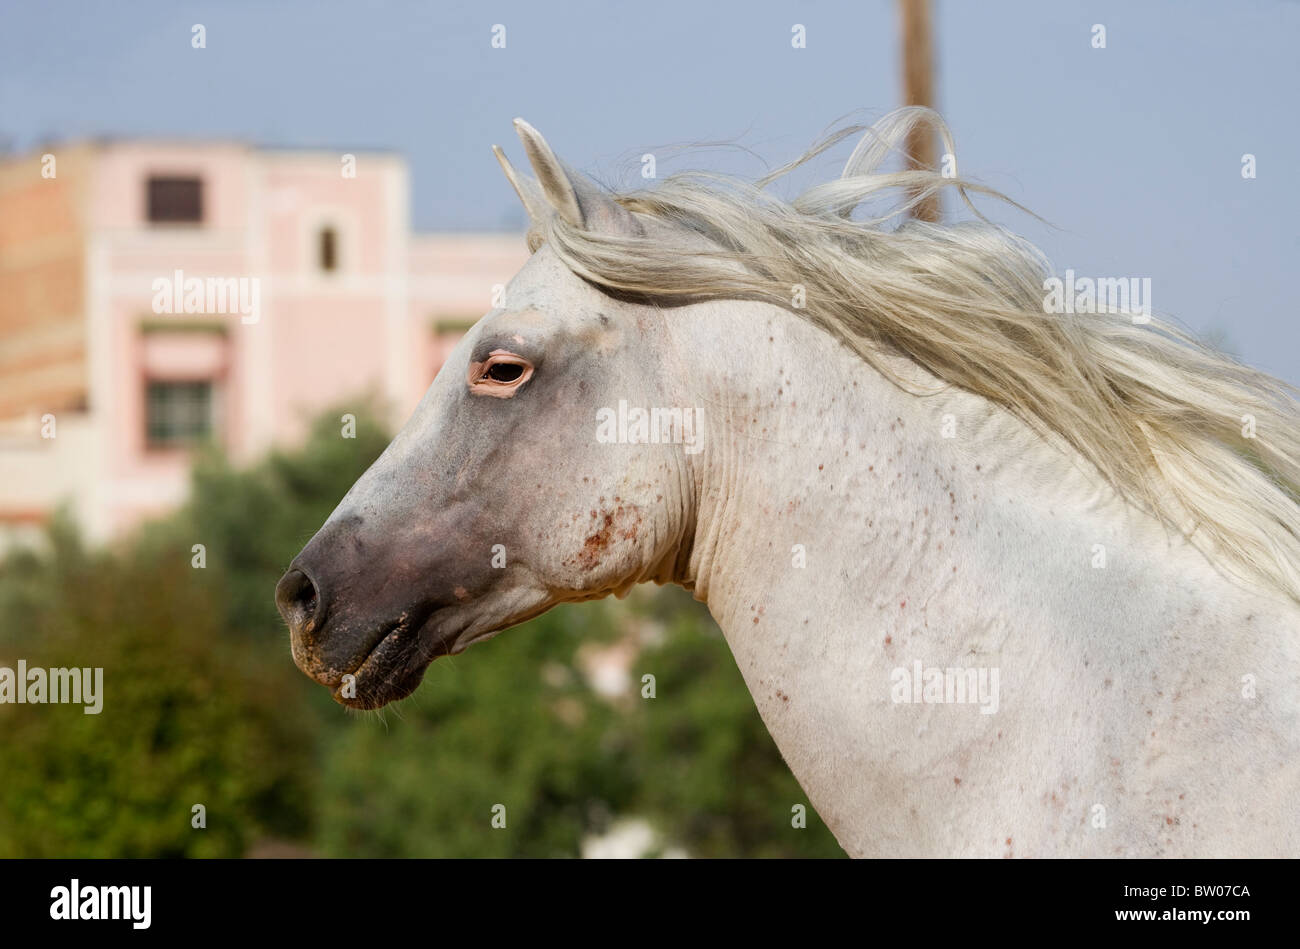 Africa Animal Horse Stallion Arab Stud beautiful Stock Photo